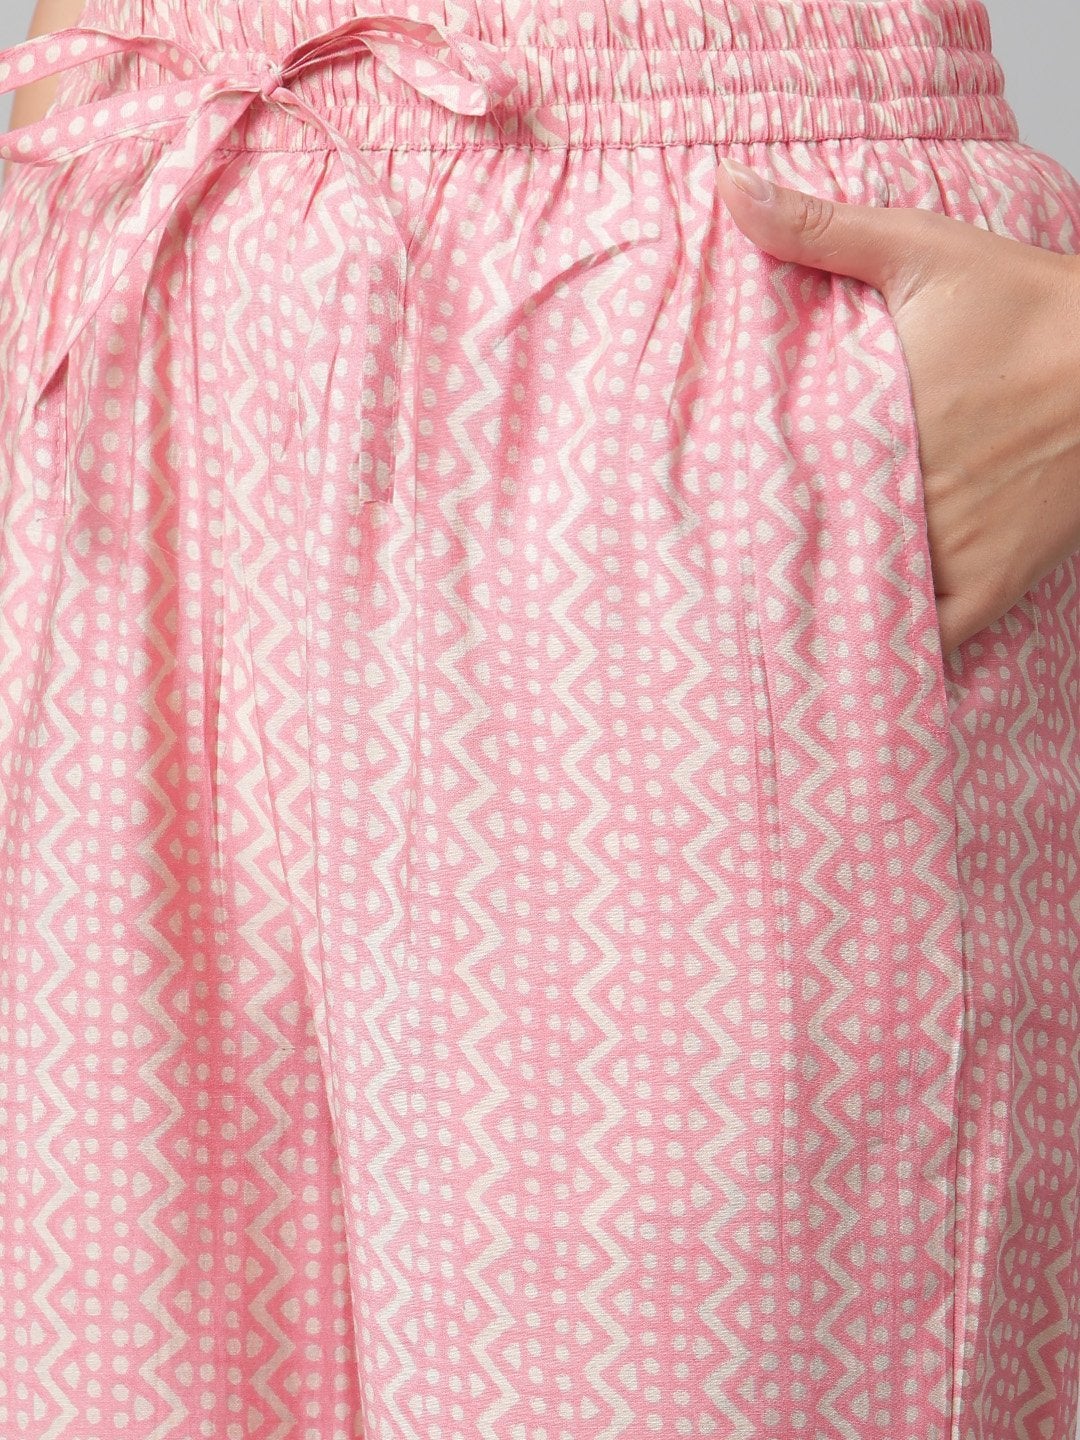 Women's Pink Rayon Kaftan Pant Set - Divena